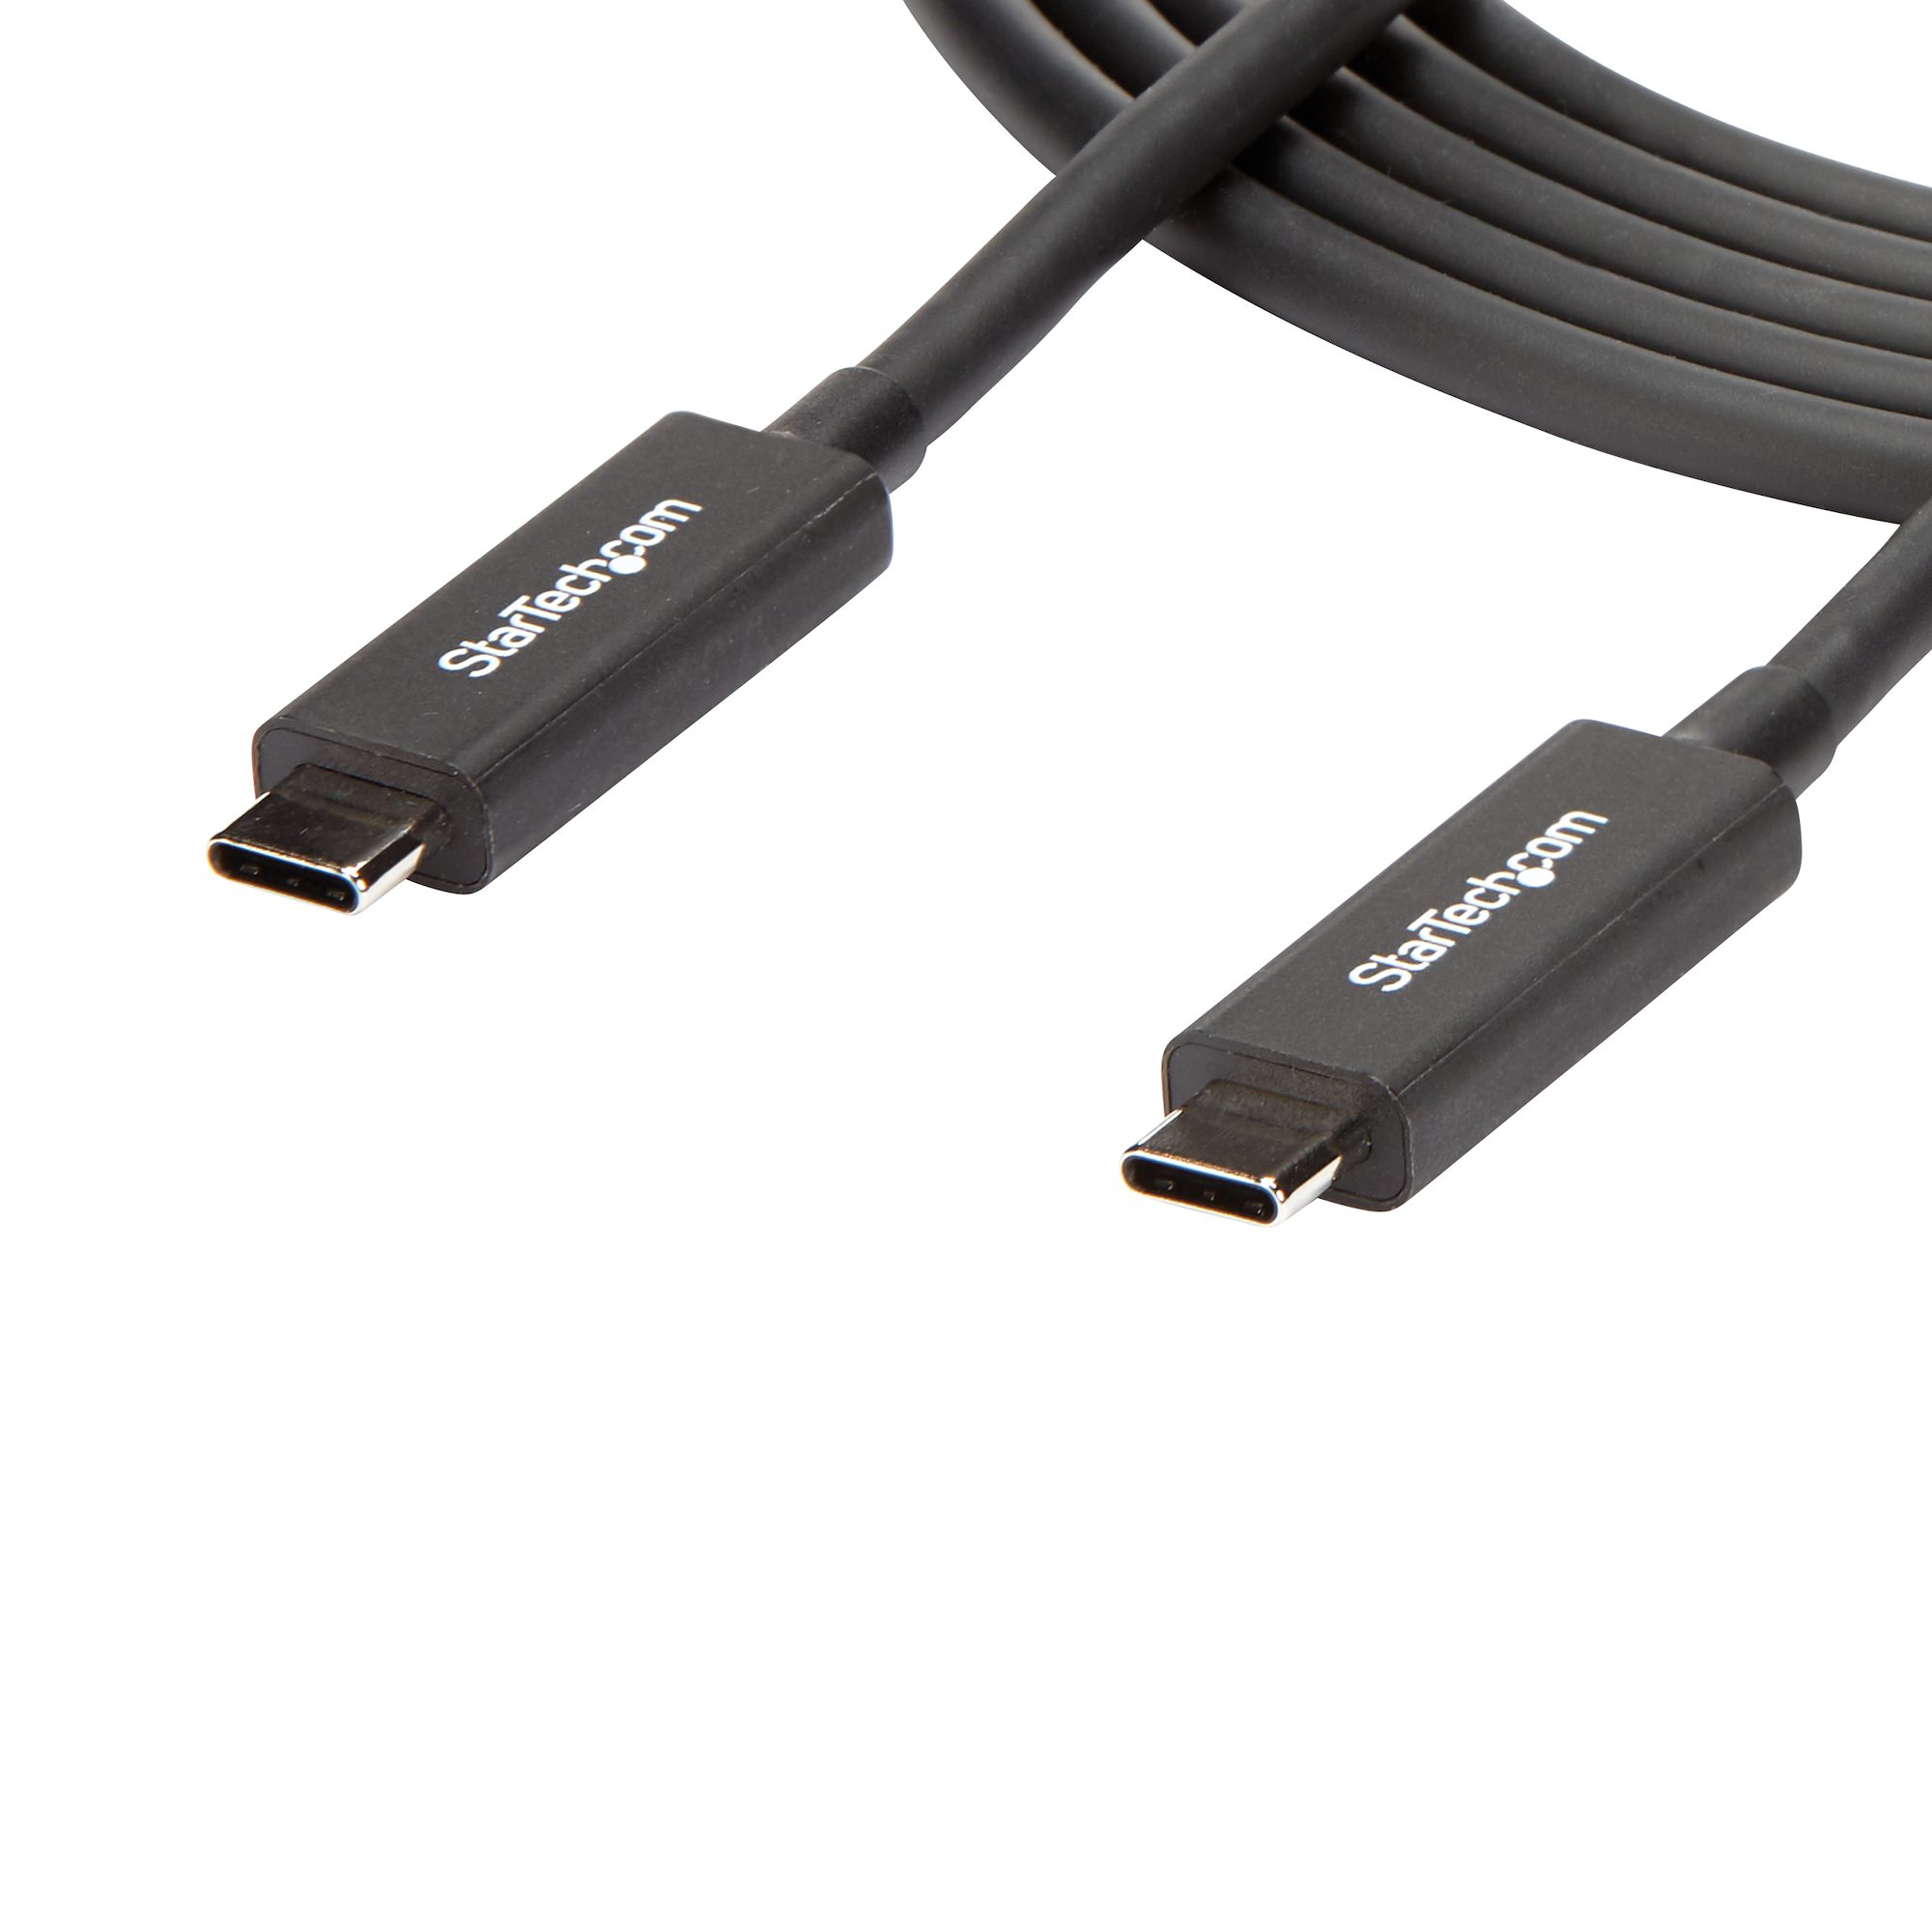 Comprar Cable Thunderbolt Apple (2m)